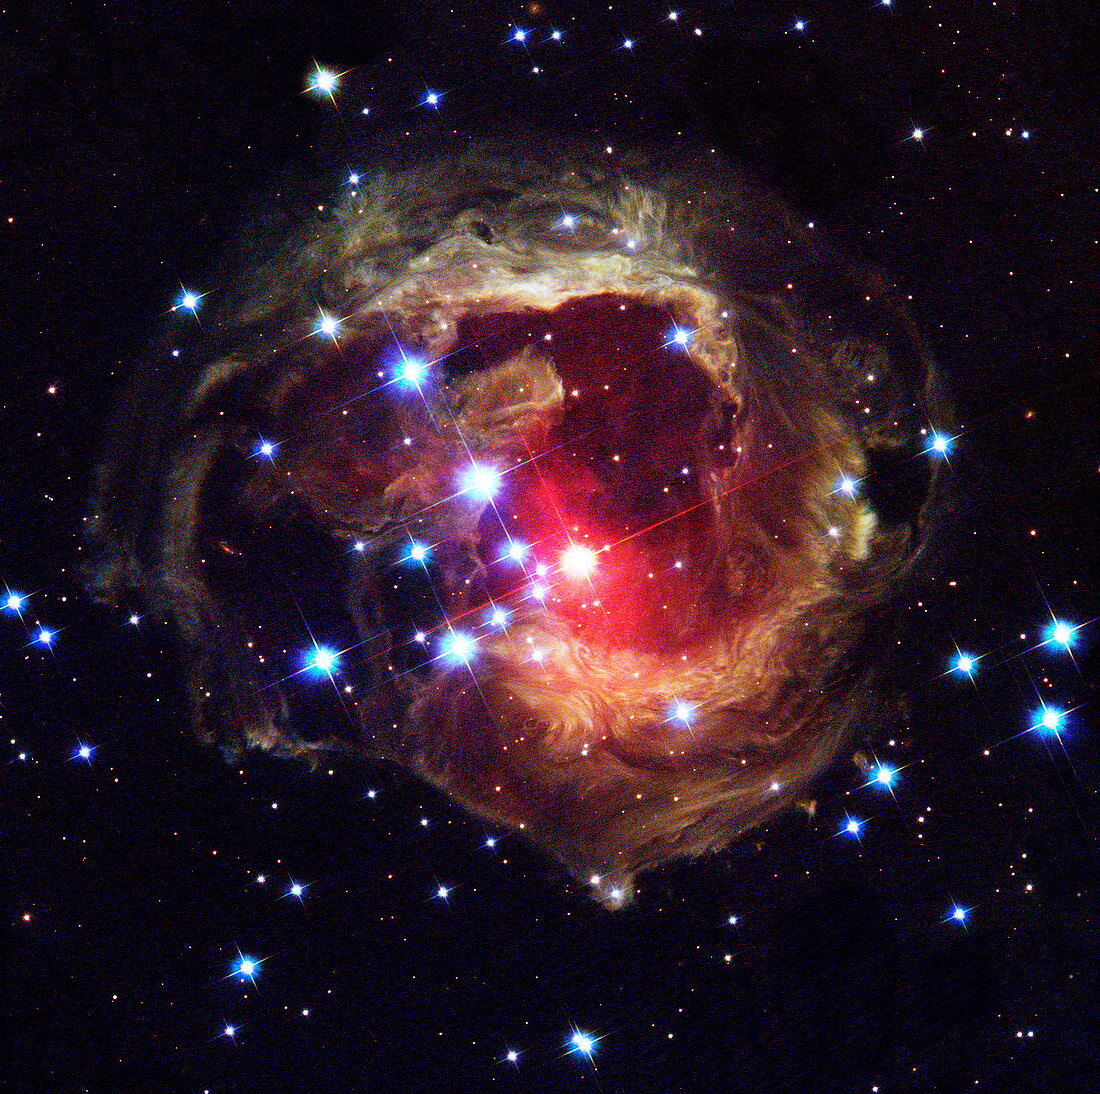 Light echoes around V838 Monocerotis star